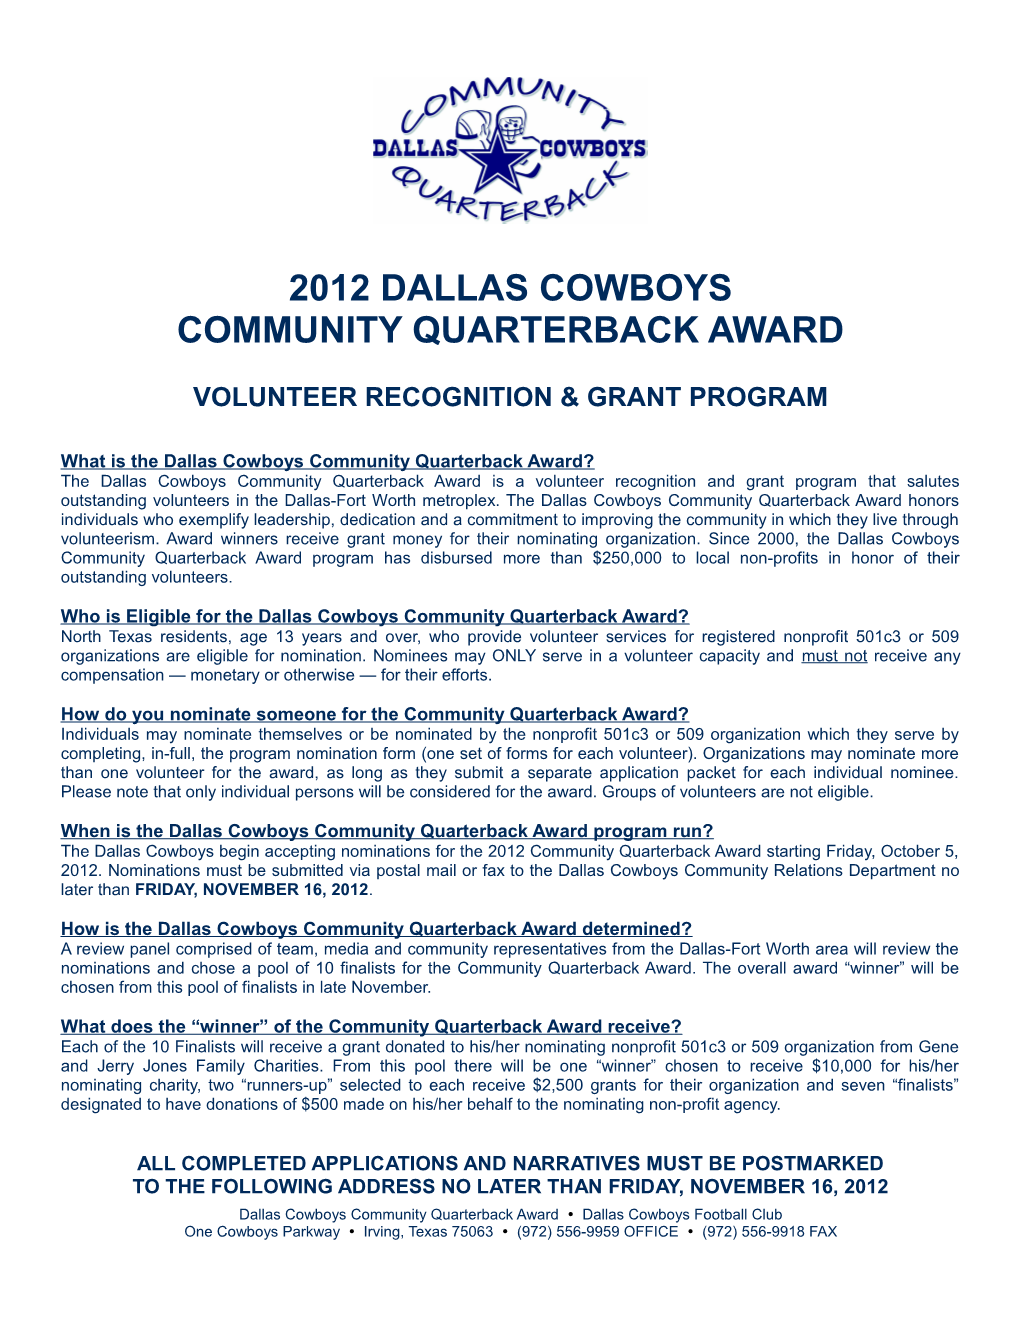 What Is the Dallas Cowboys Community Quarterback Award?